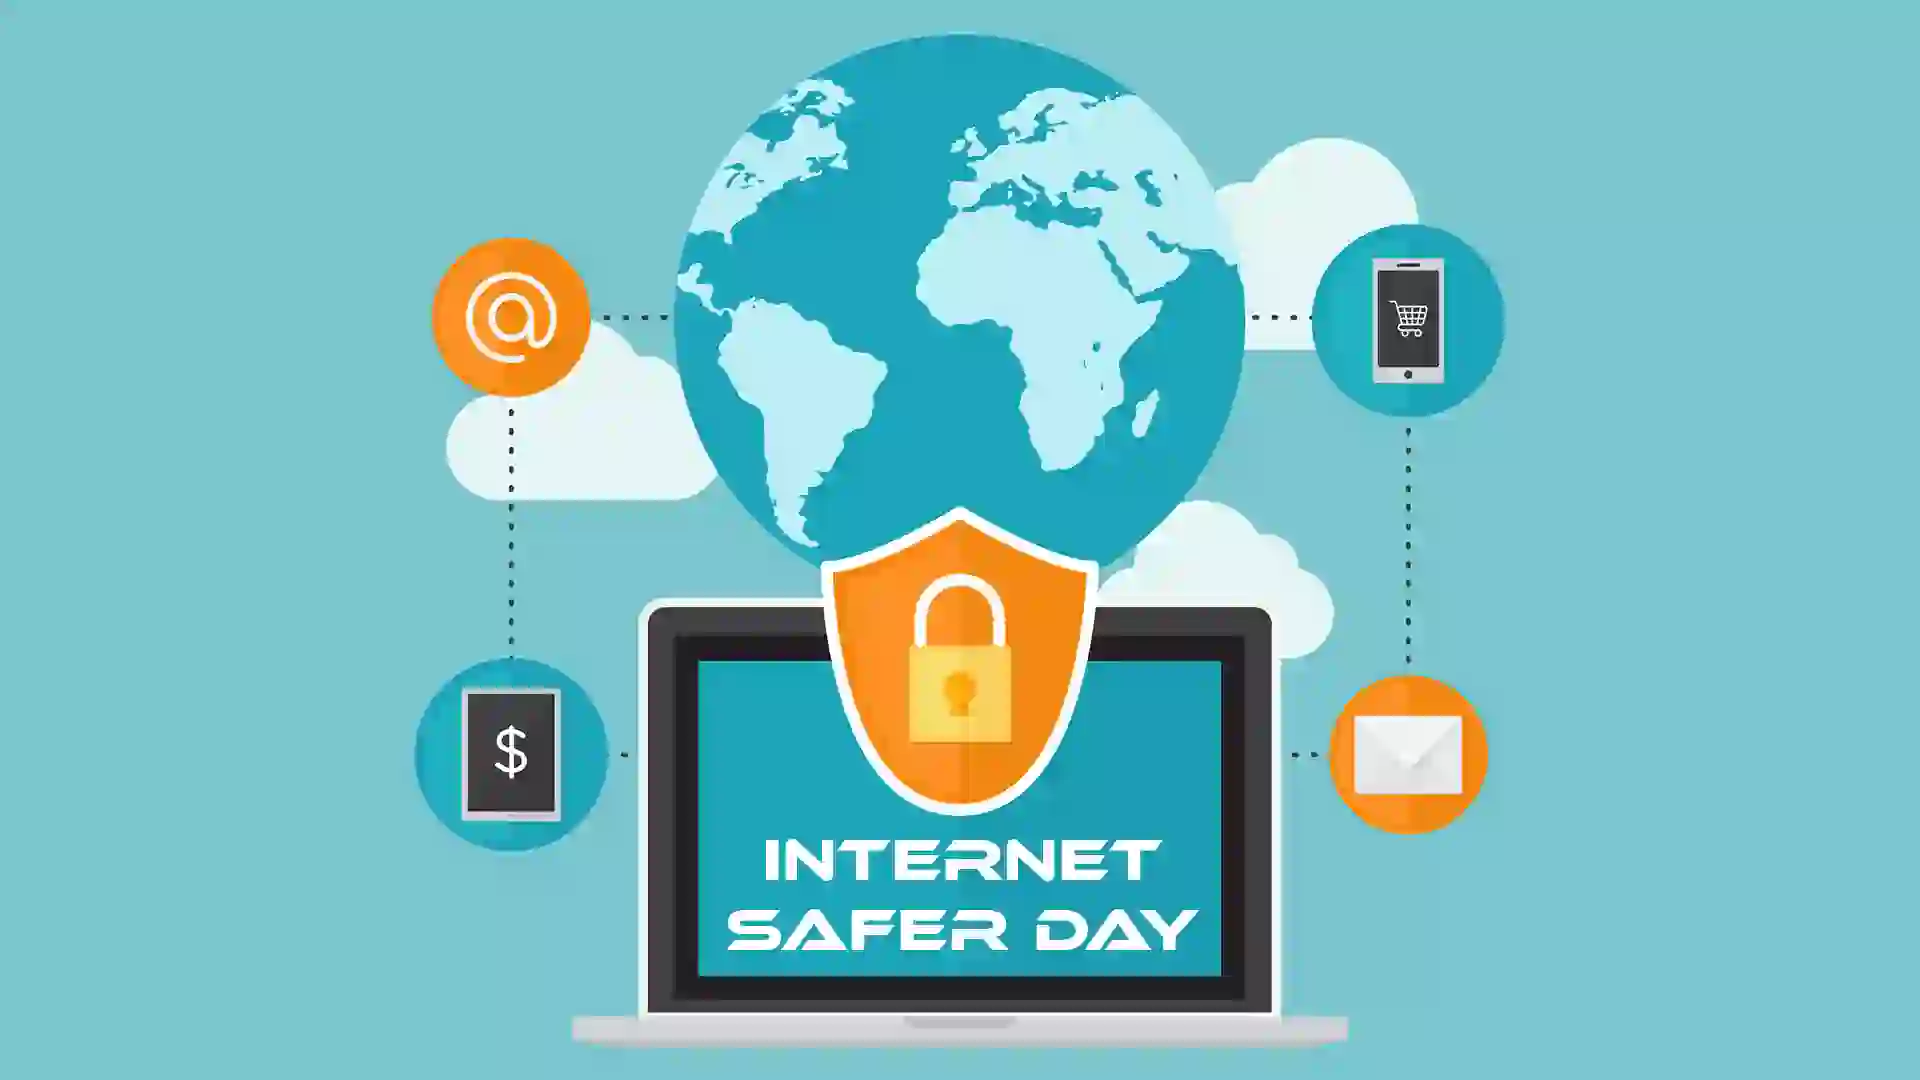 Internet Safer Day This Post Design By The Revolution Deshbhakt Hindustani